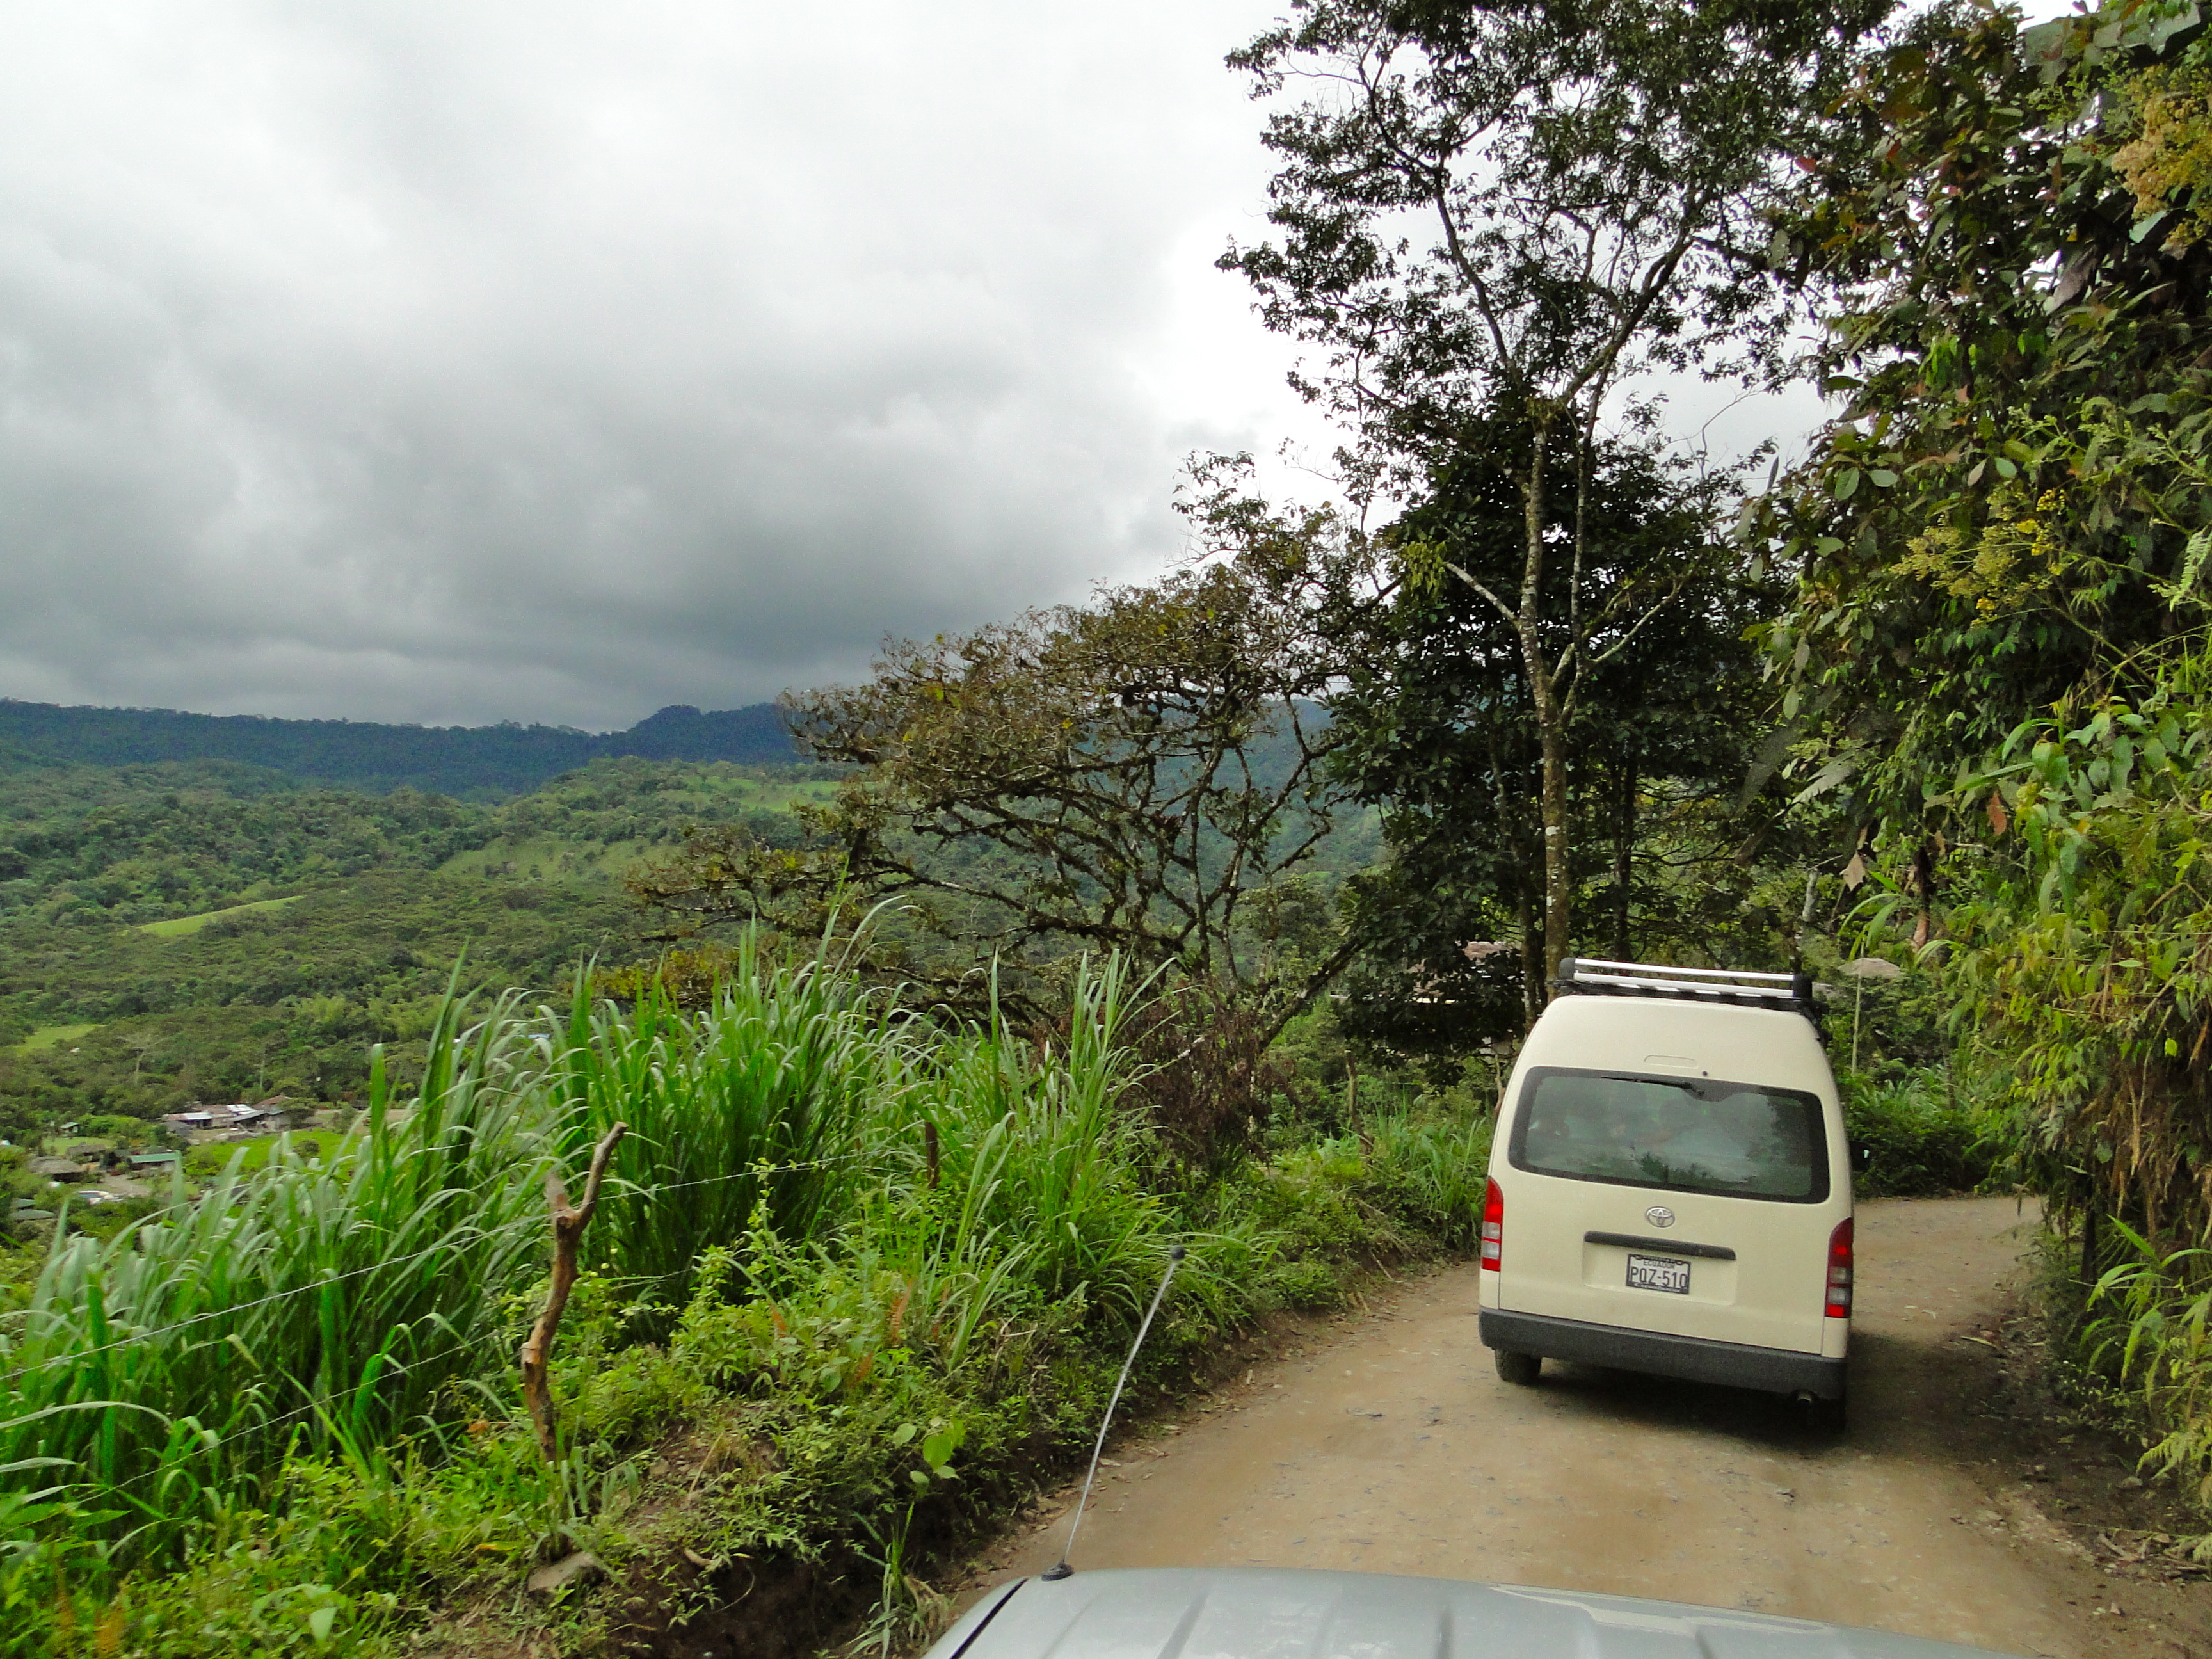 Pick-up truck rides in Mindo, Ecuador.